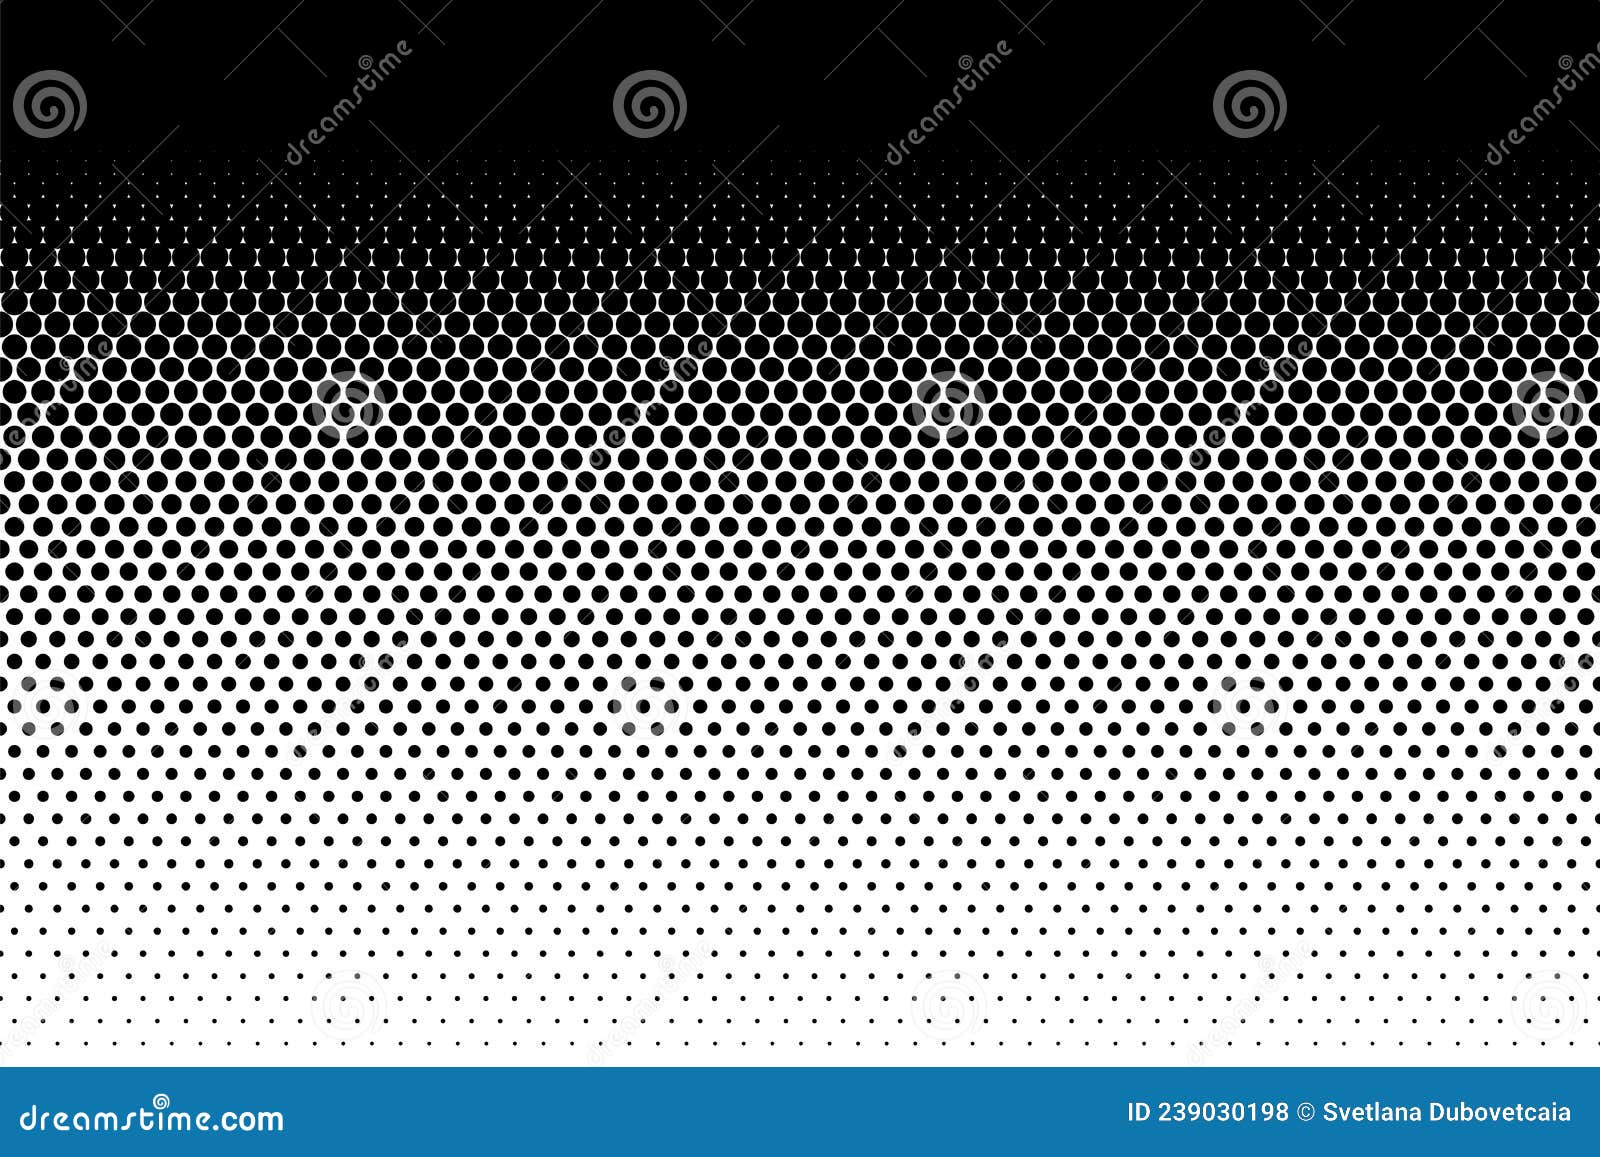 dot perforation texture. dots halftone seamless pattern. fade shade background. noise gradation border. black screentone diffuse b